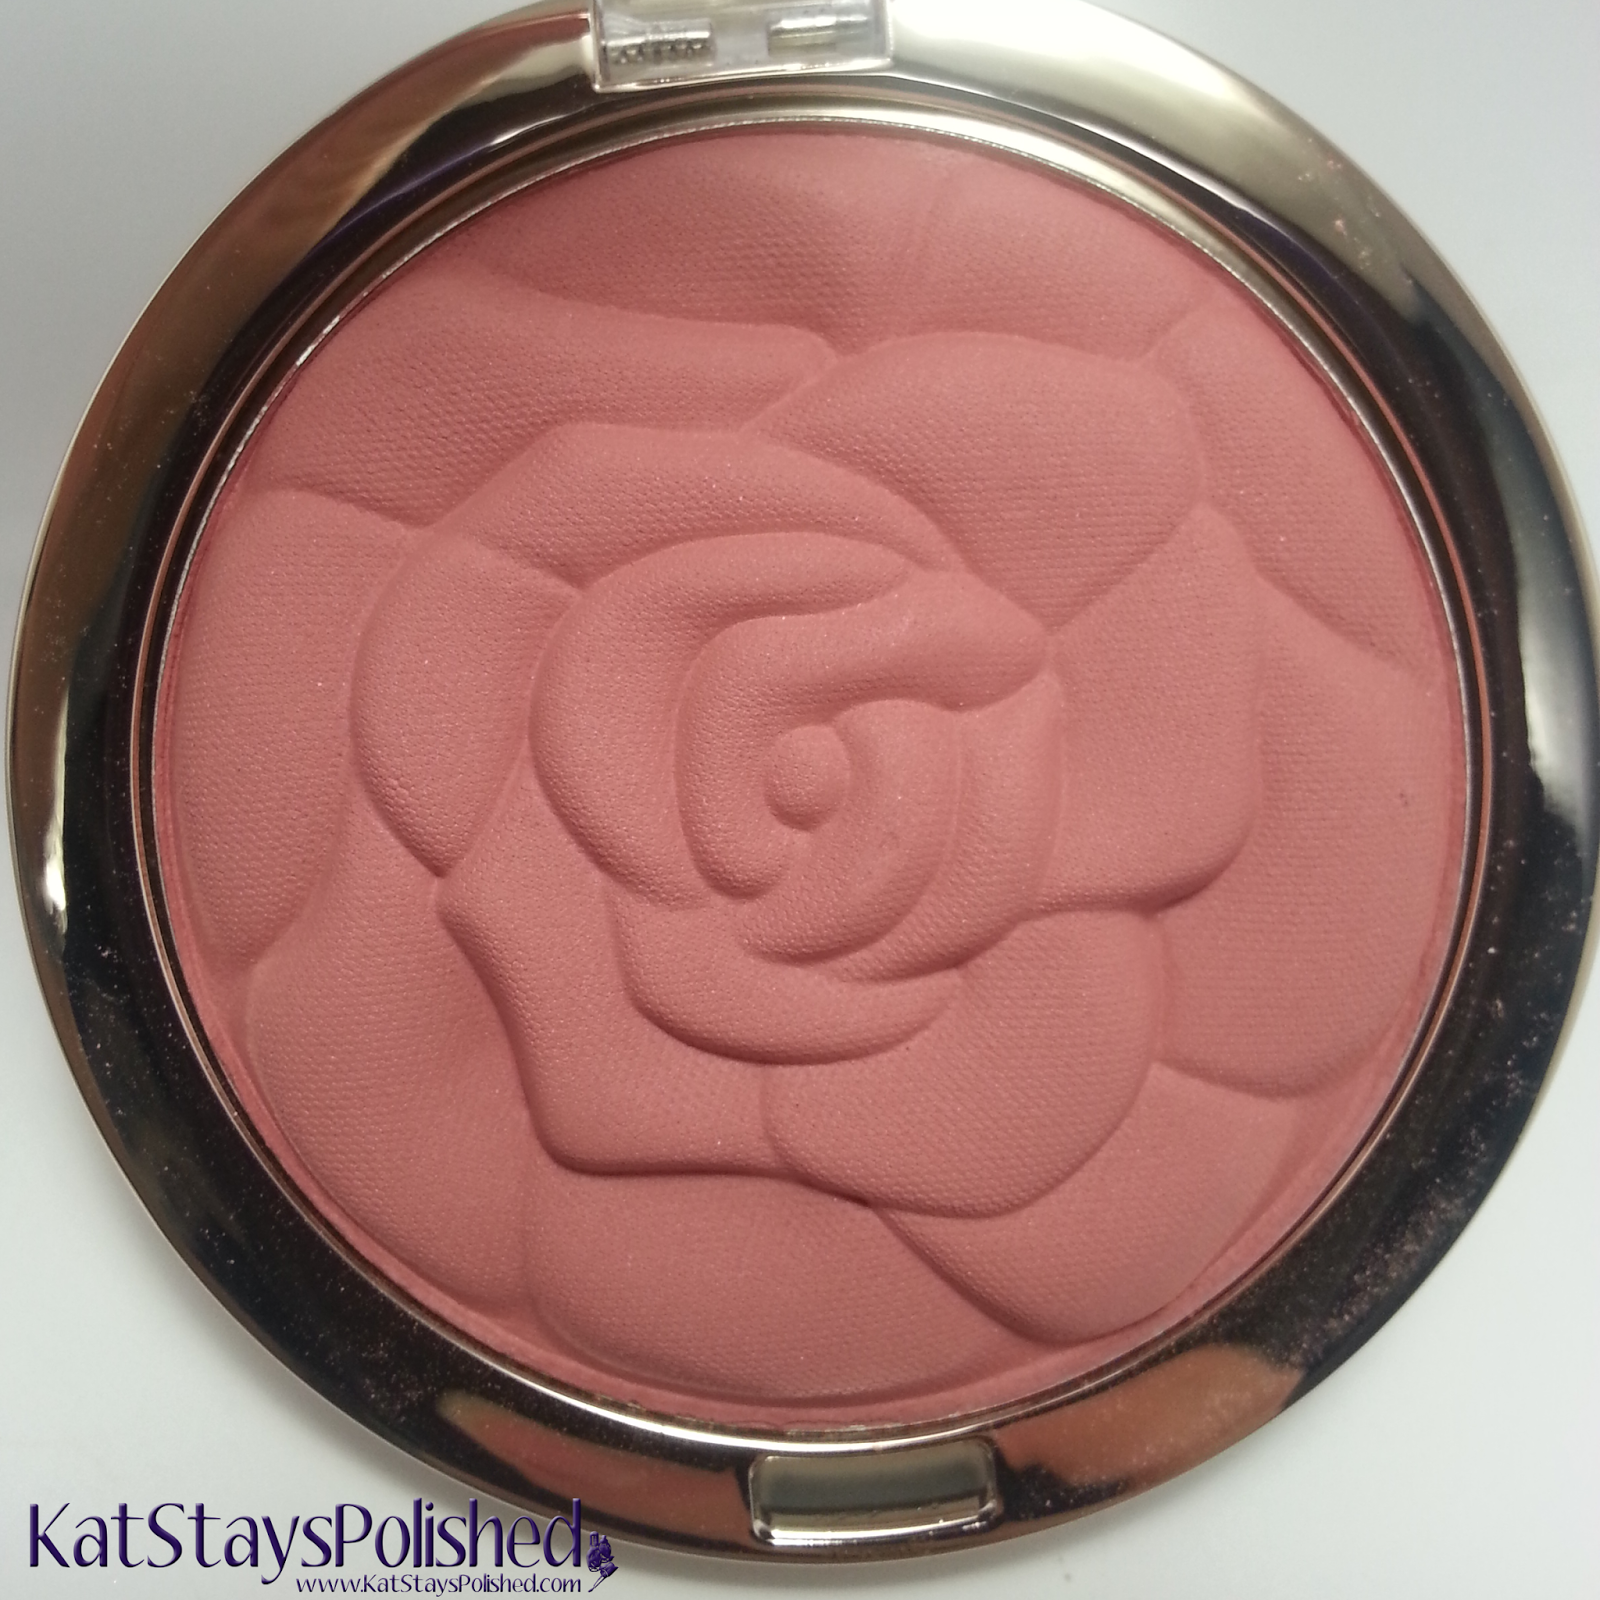 Milani Rose Powder Blush - Romantic Rose | Kat Stays Polished